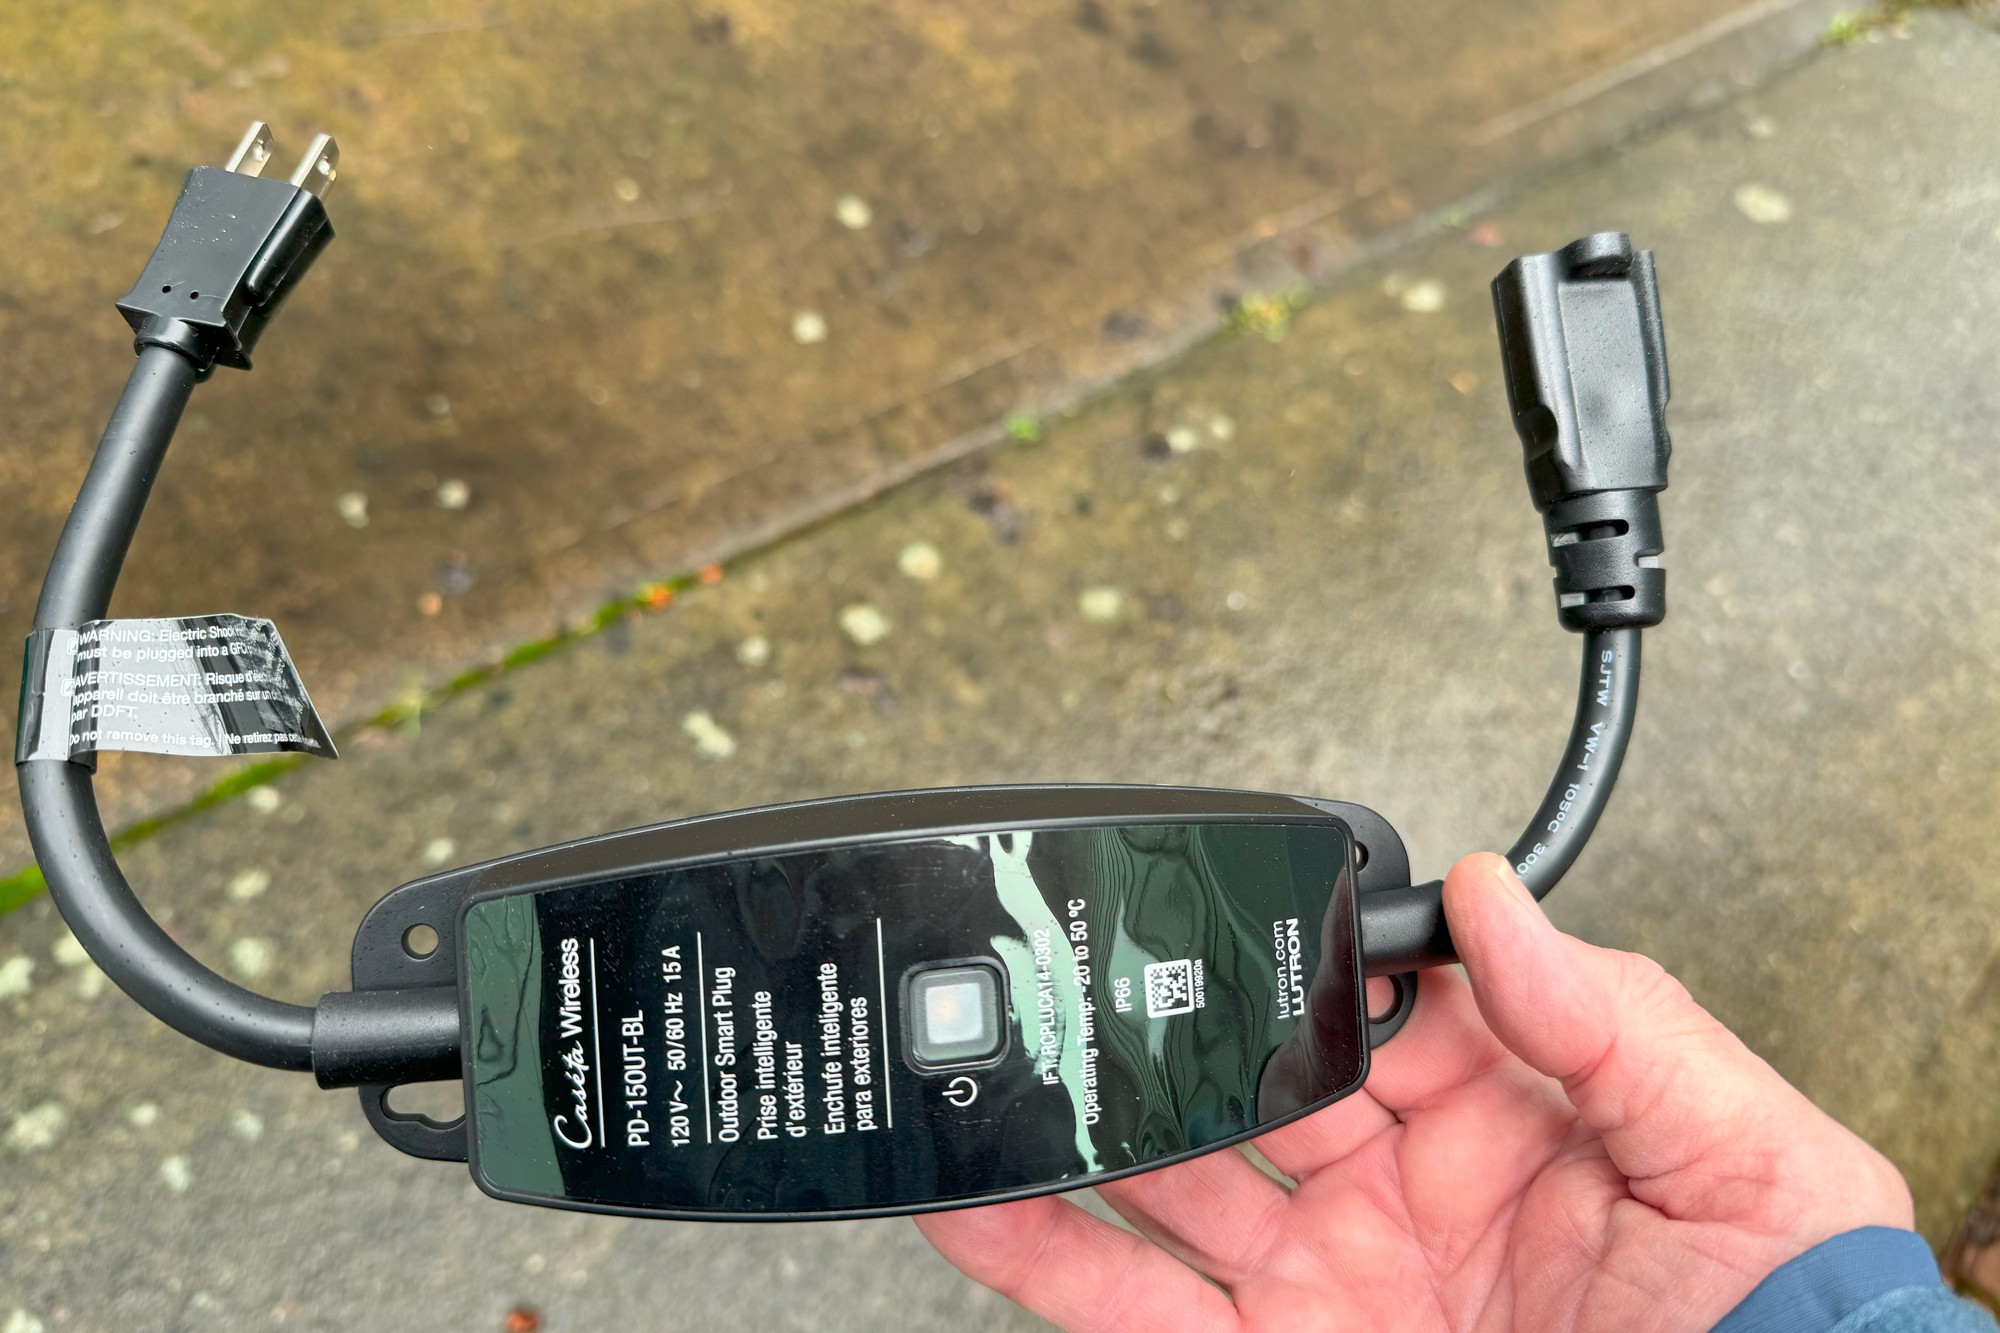 Lutron Caséta Wireless Outdoor Smart Plug -- Best outdoor smart plug for power users